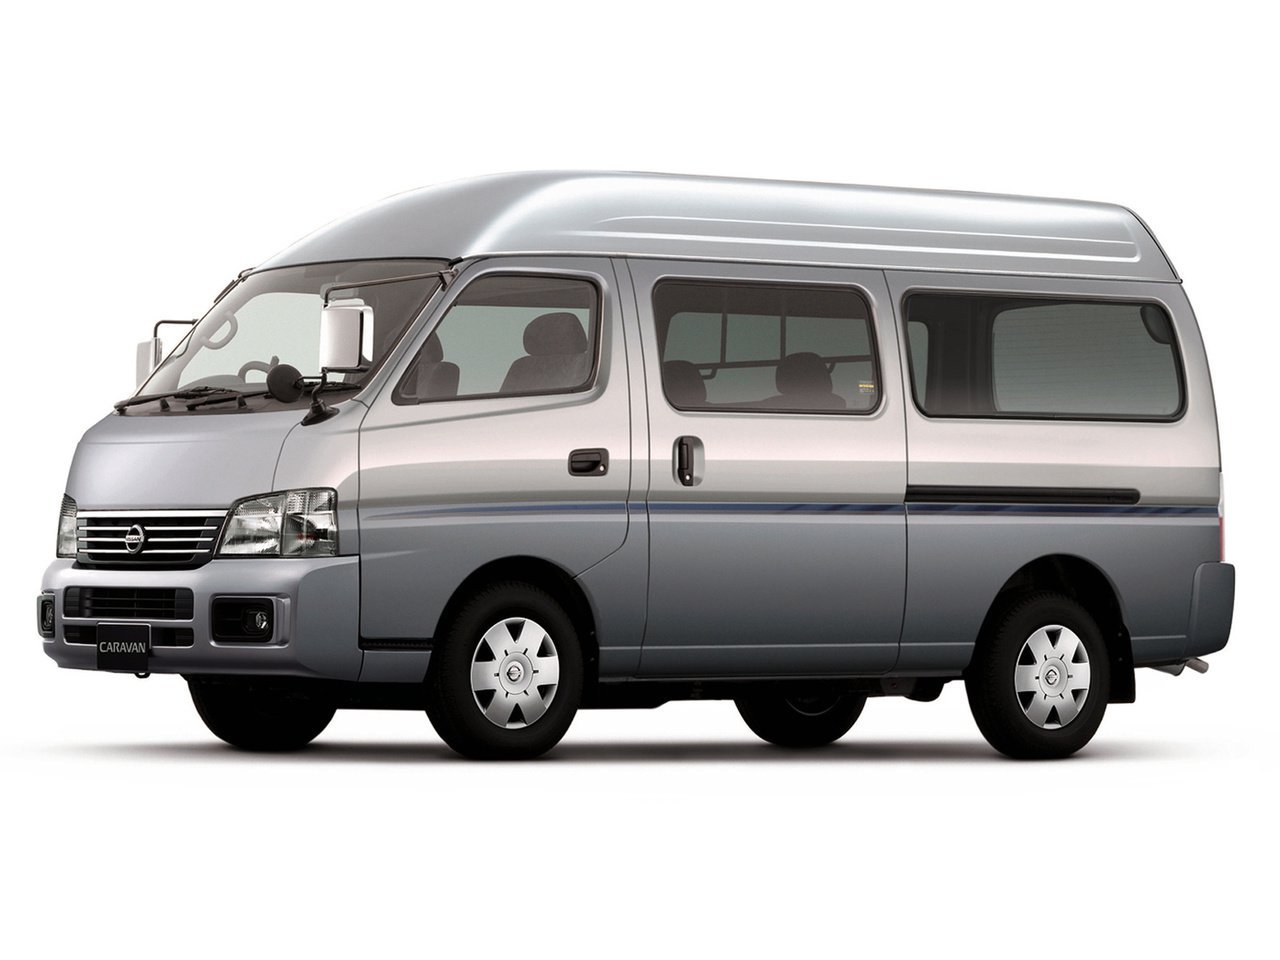 Nissan Caravan 2001 - 2005